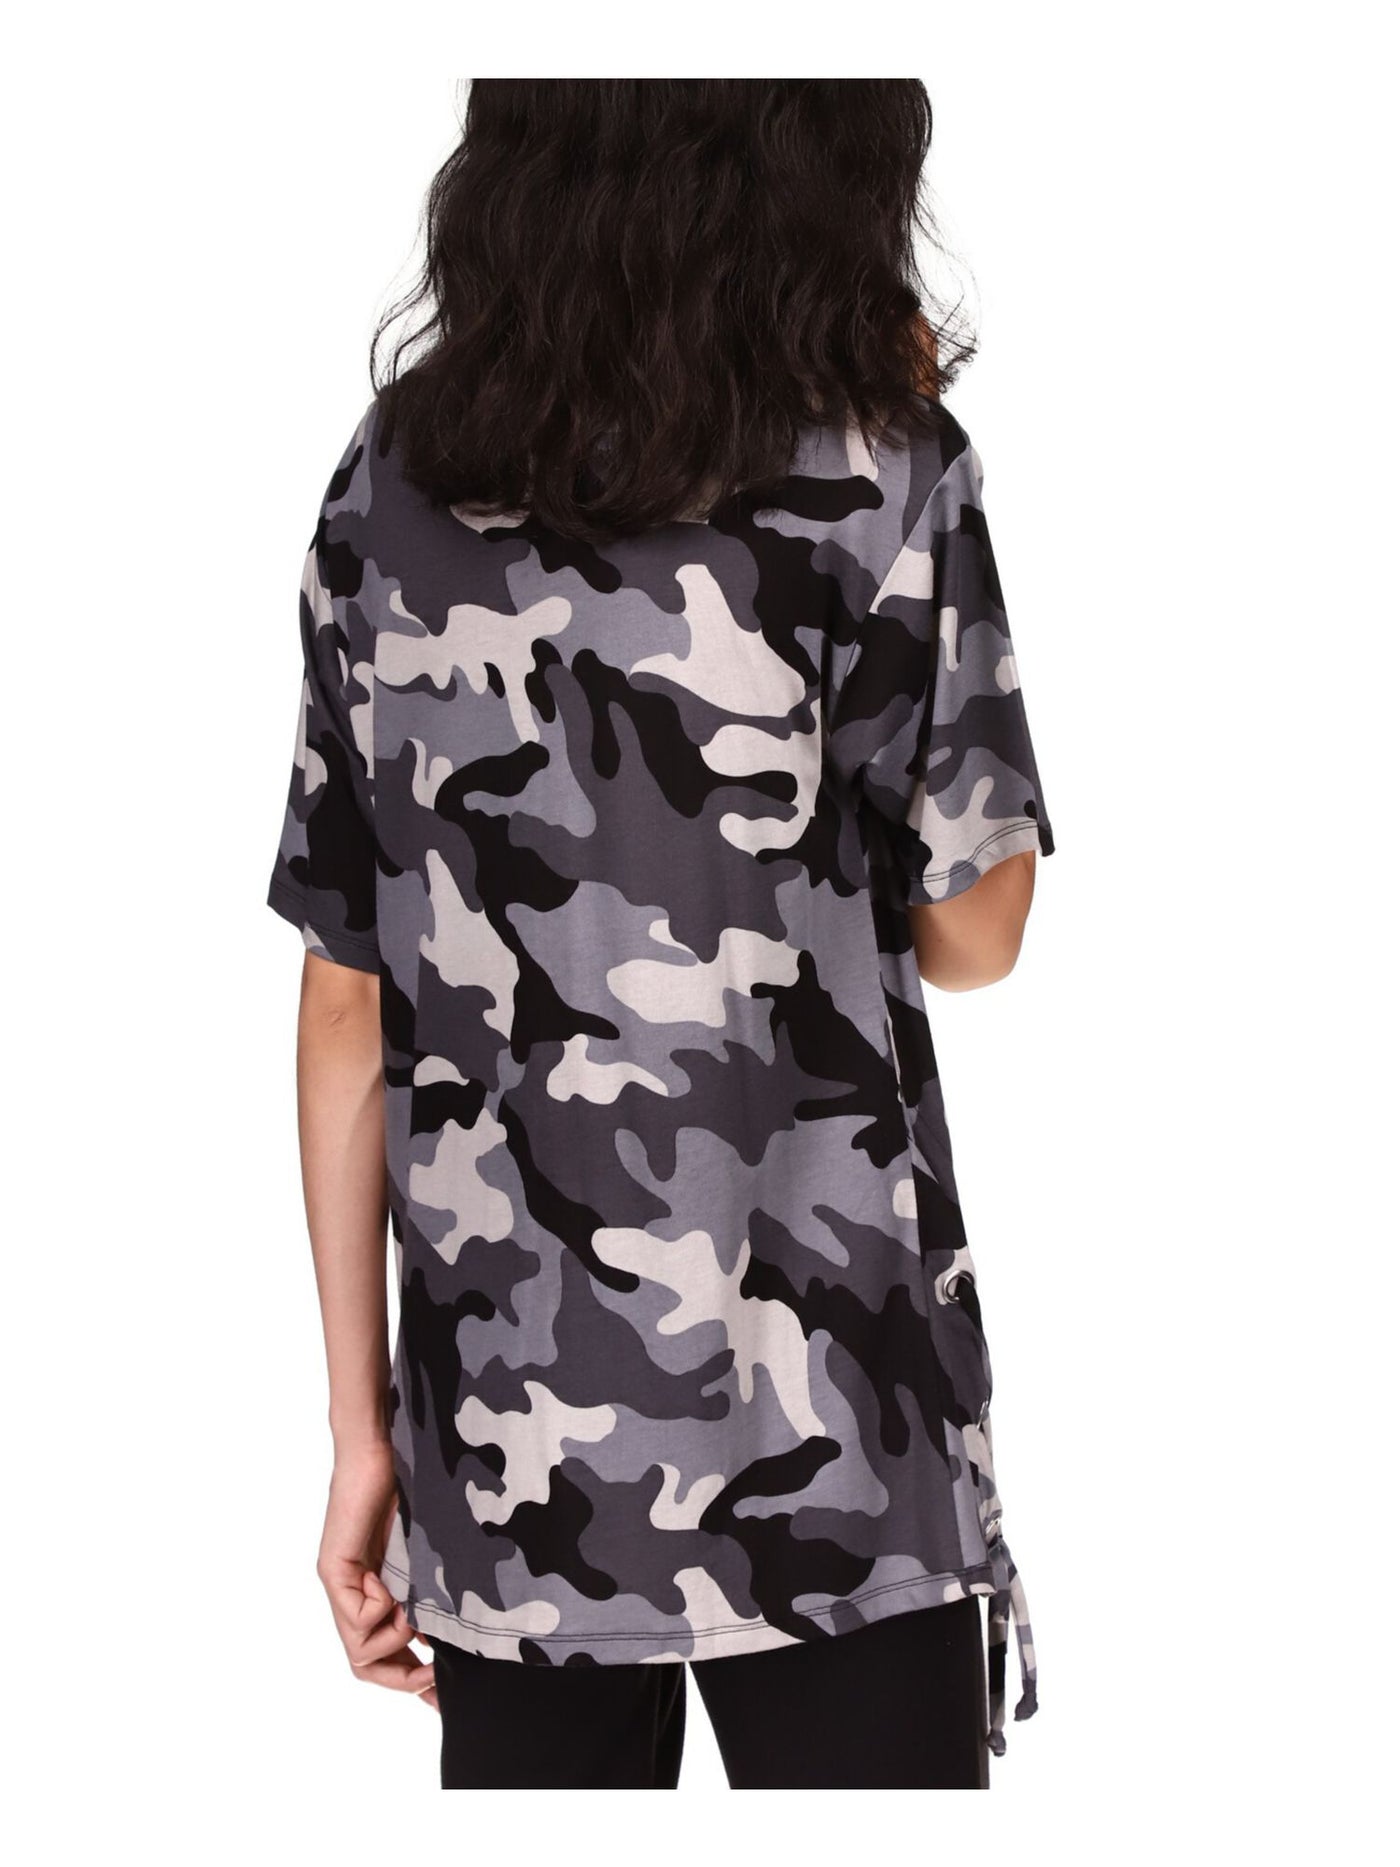 MICHAEL KORS Womens Gray Camouflage Elbow Sleeve Crew Neck Tunic Top L